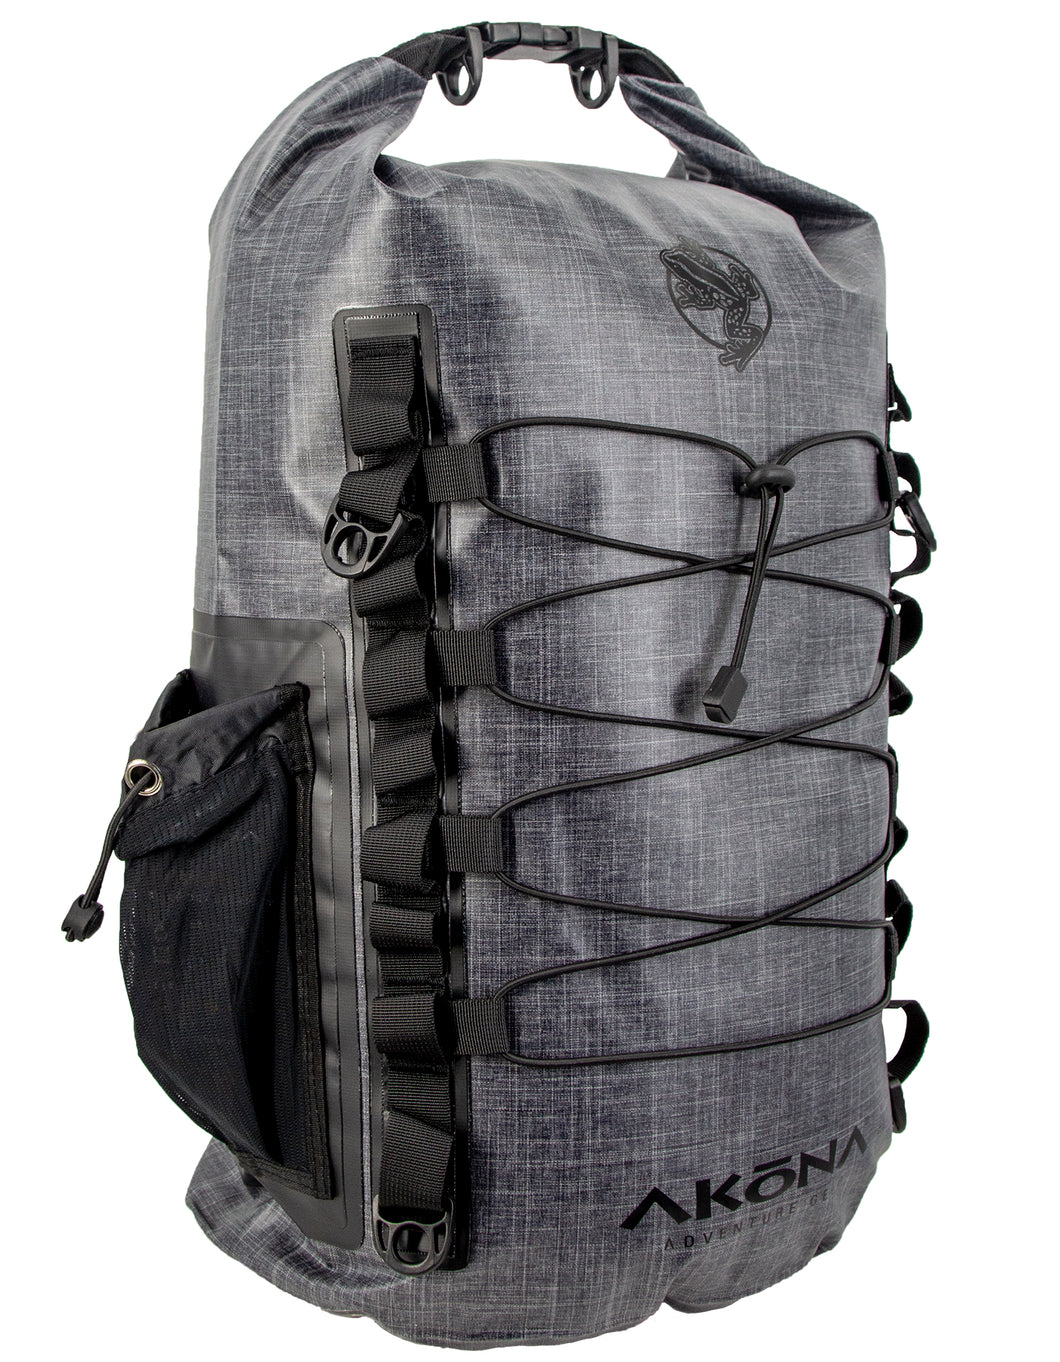 Akona Tanami  Sling Dry Backpack